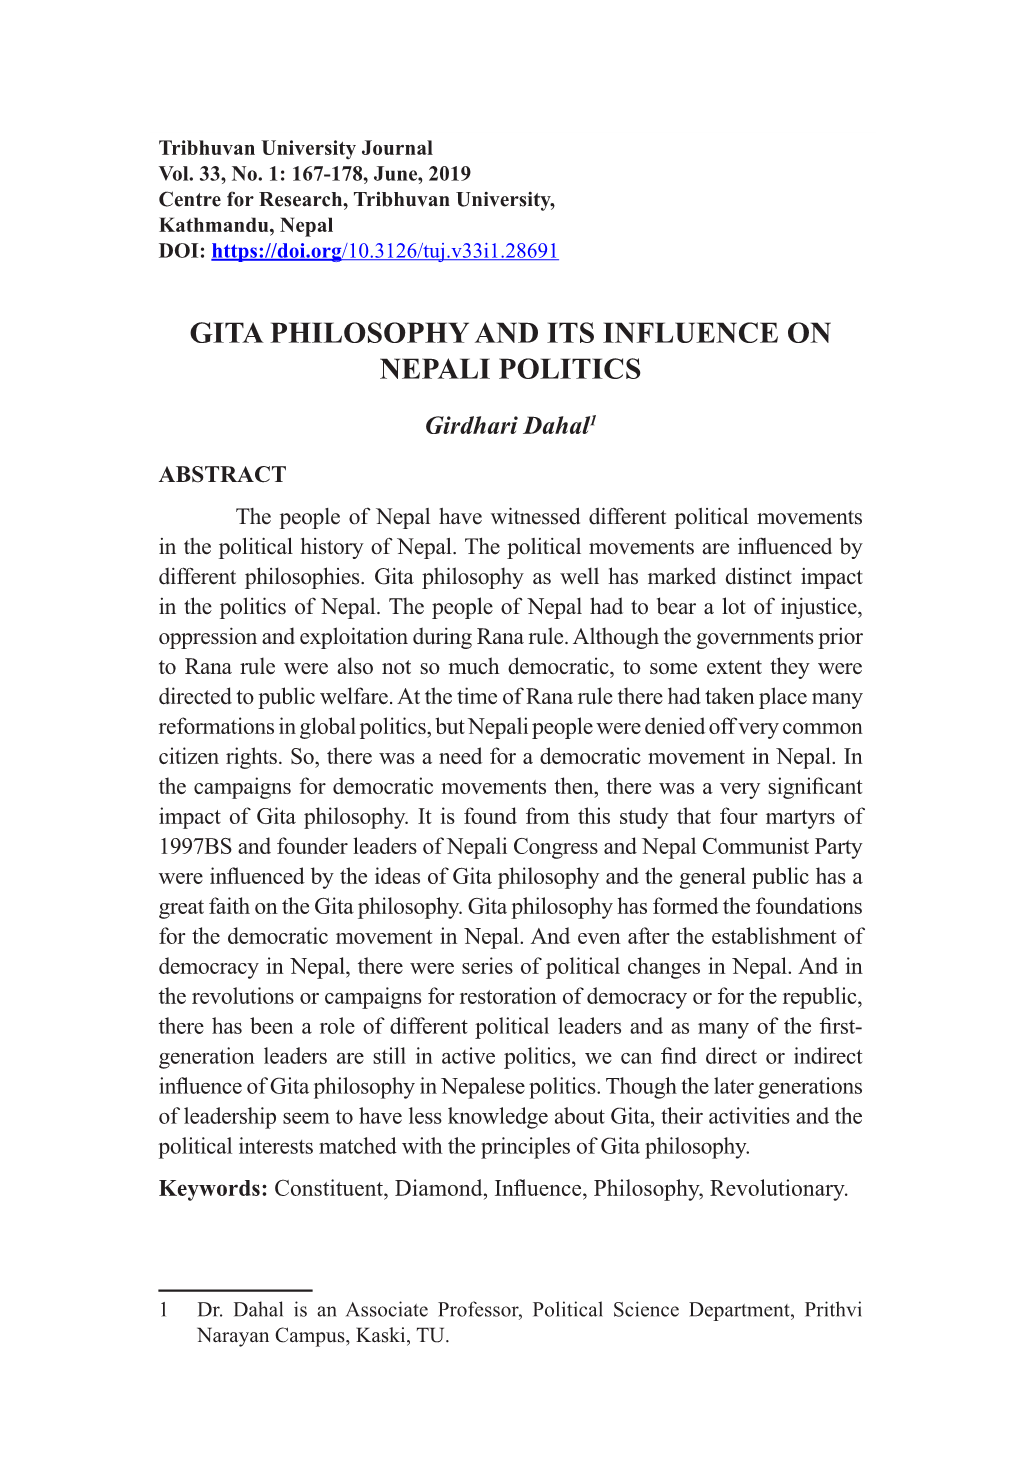 Gita Philosophy and Its Influence on Nepali Politics